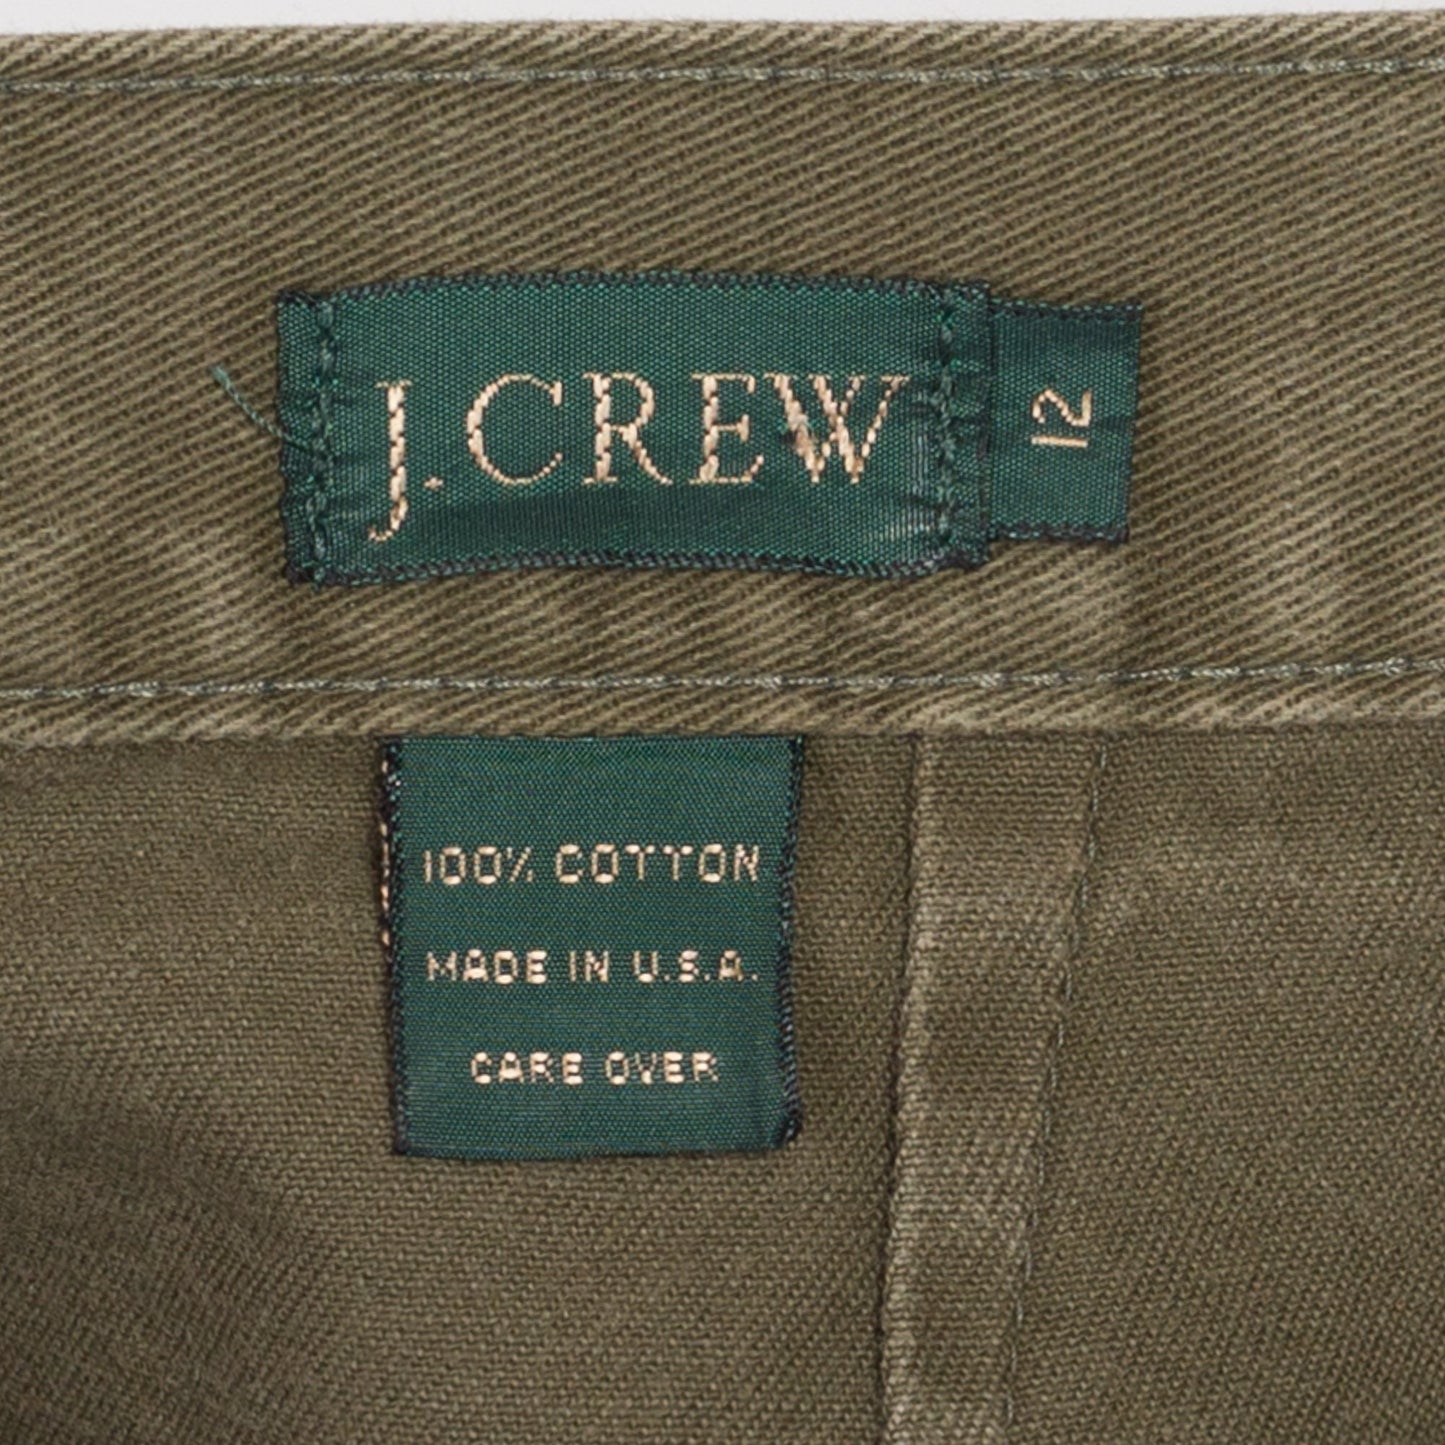 Medium 90s Olive Green Jean Shorts 29.5" | Vintage High Waisted Denim Mom Shorts